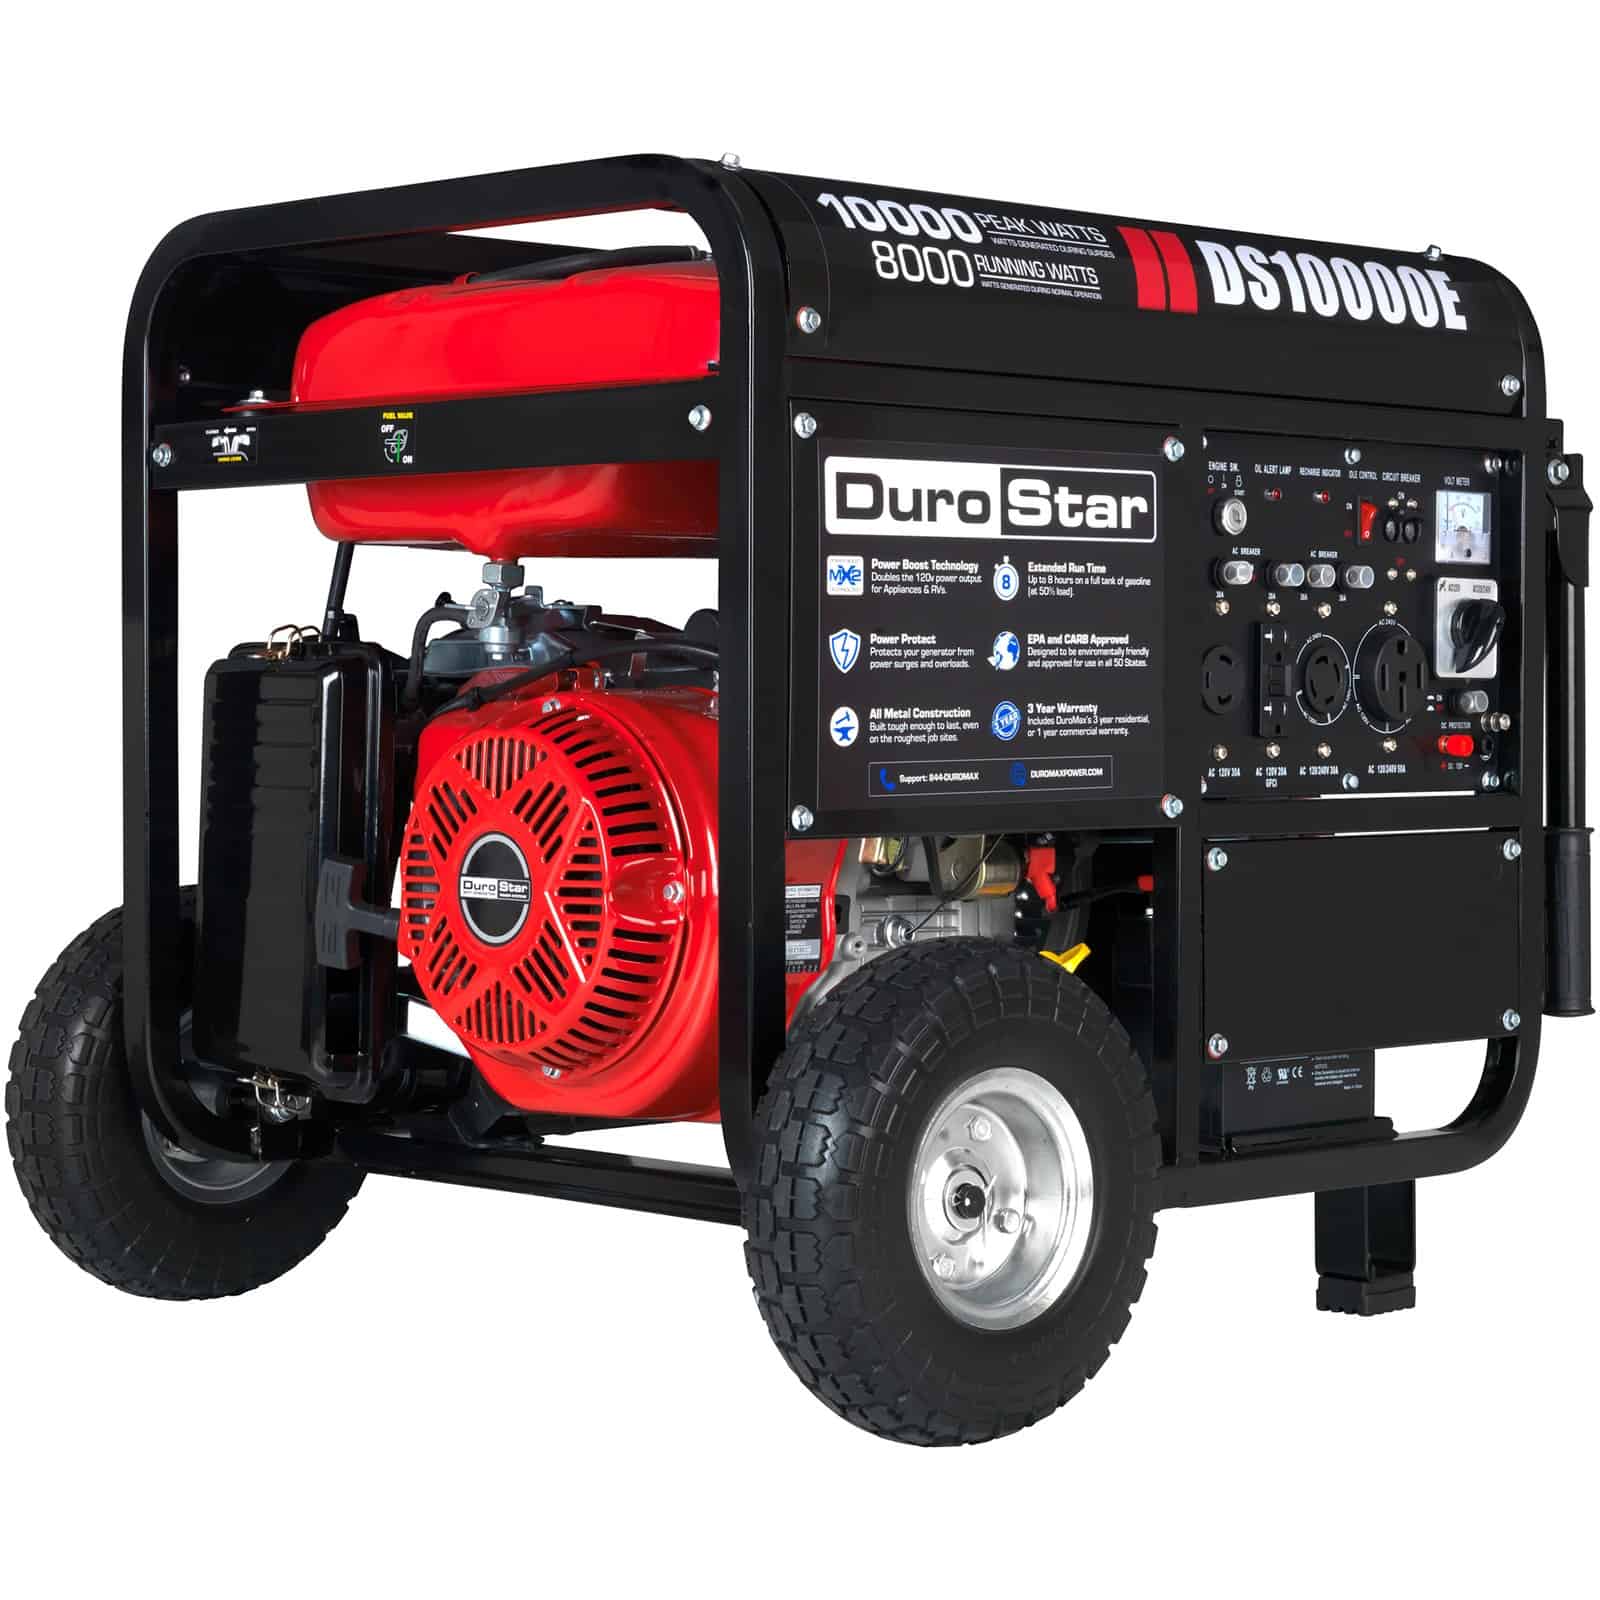 DuroStar-DS10000E-10000W-440cc-Portable-Gas-Generator-w-Wheel-Kit